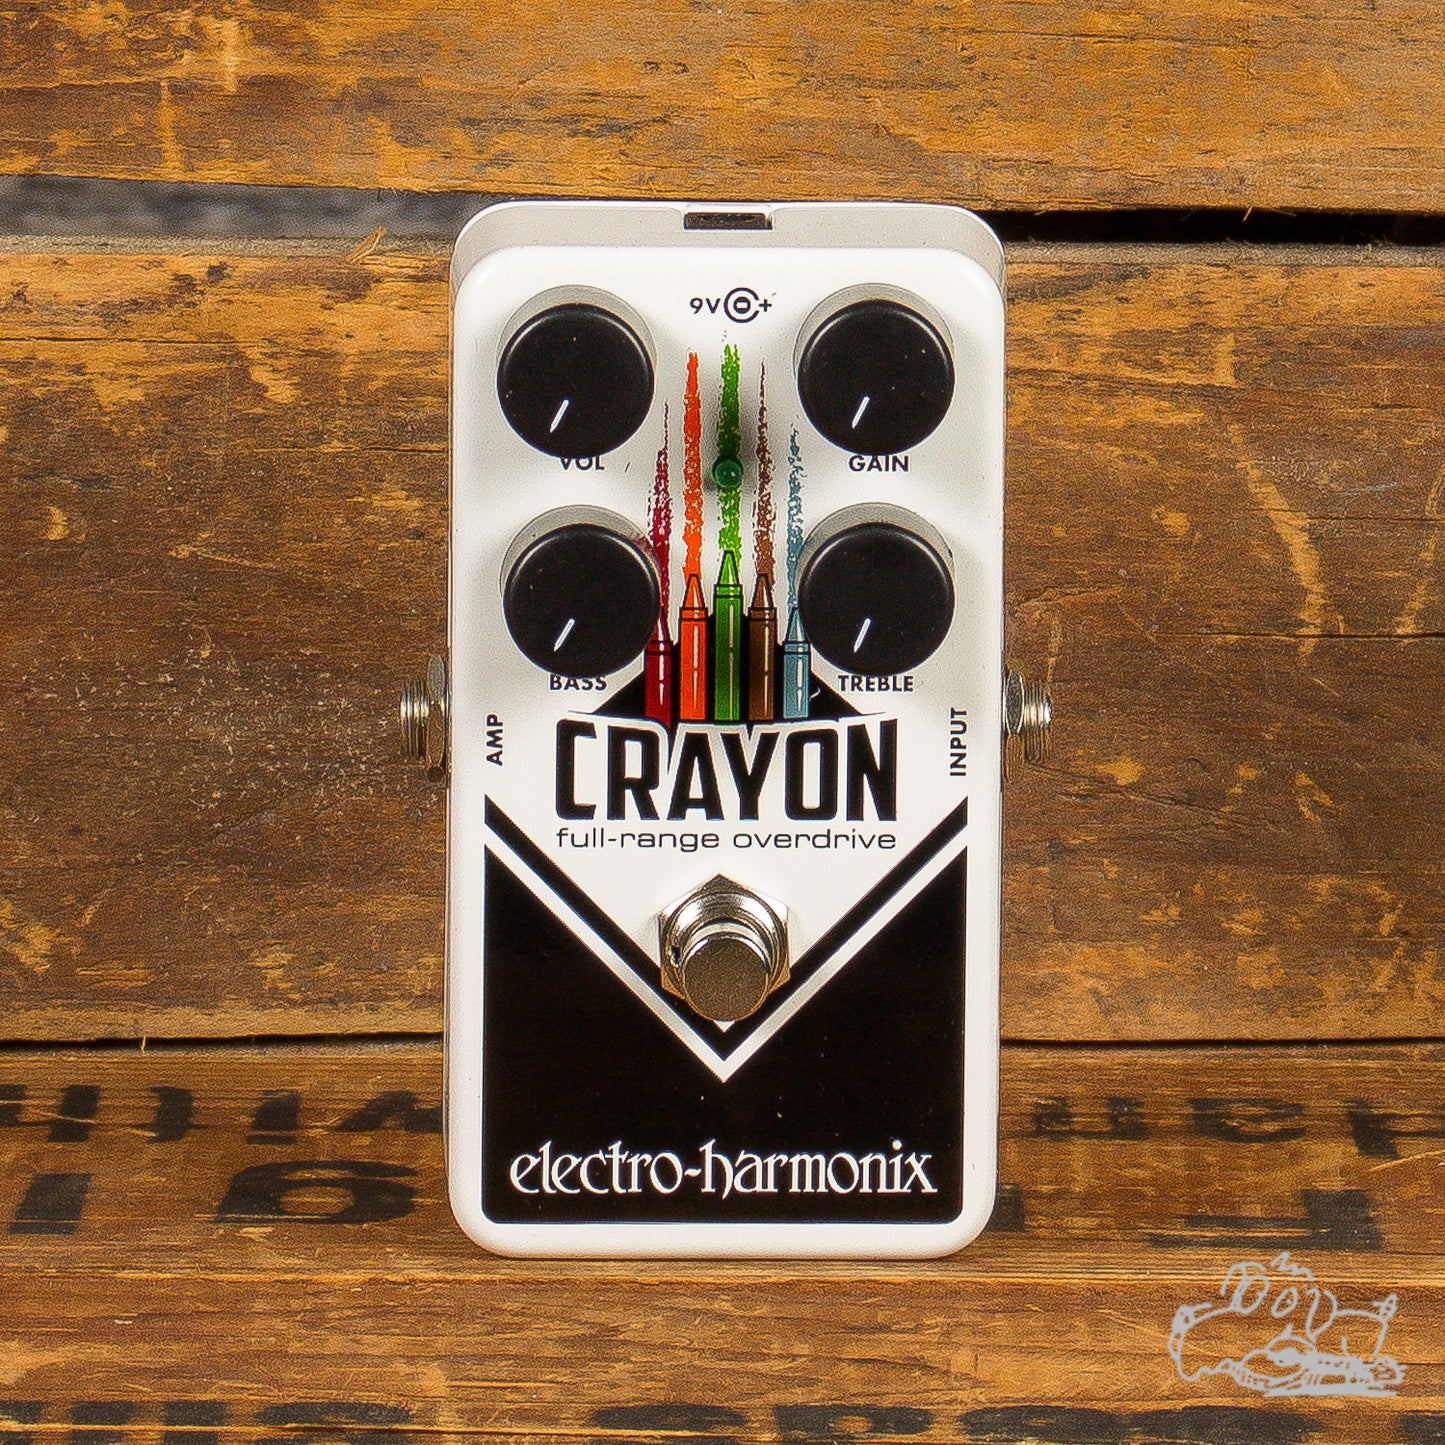 Electro-Harmonix Crayon 69 Full Range Overdrive Pedal